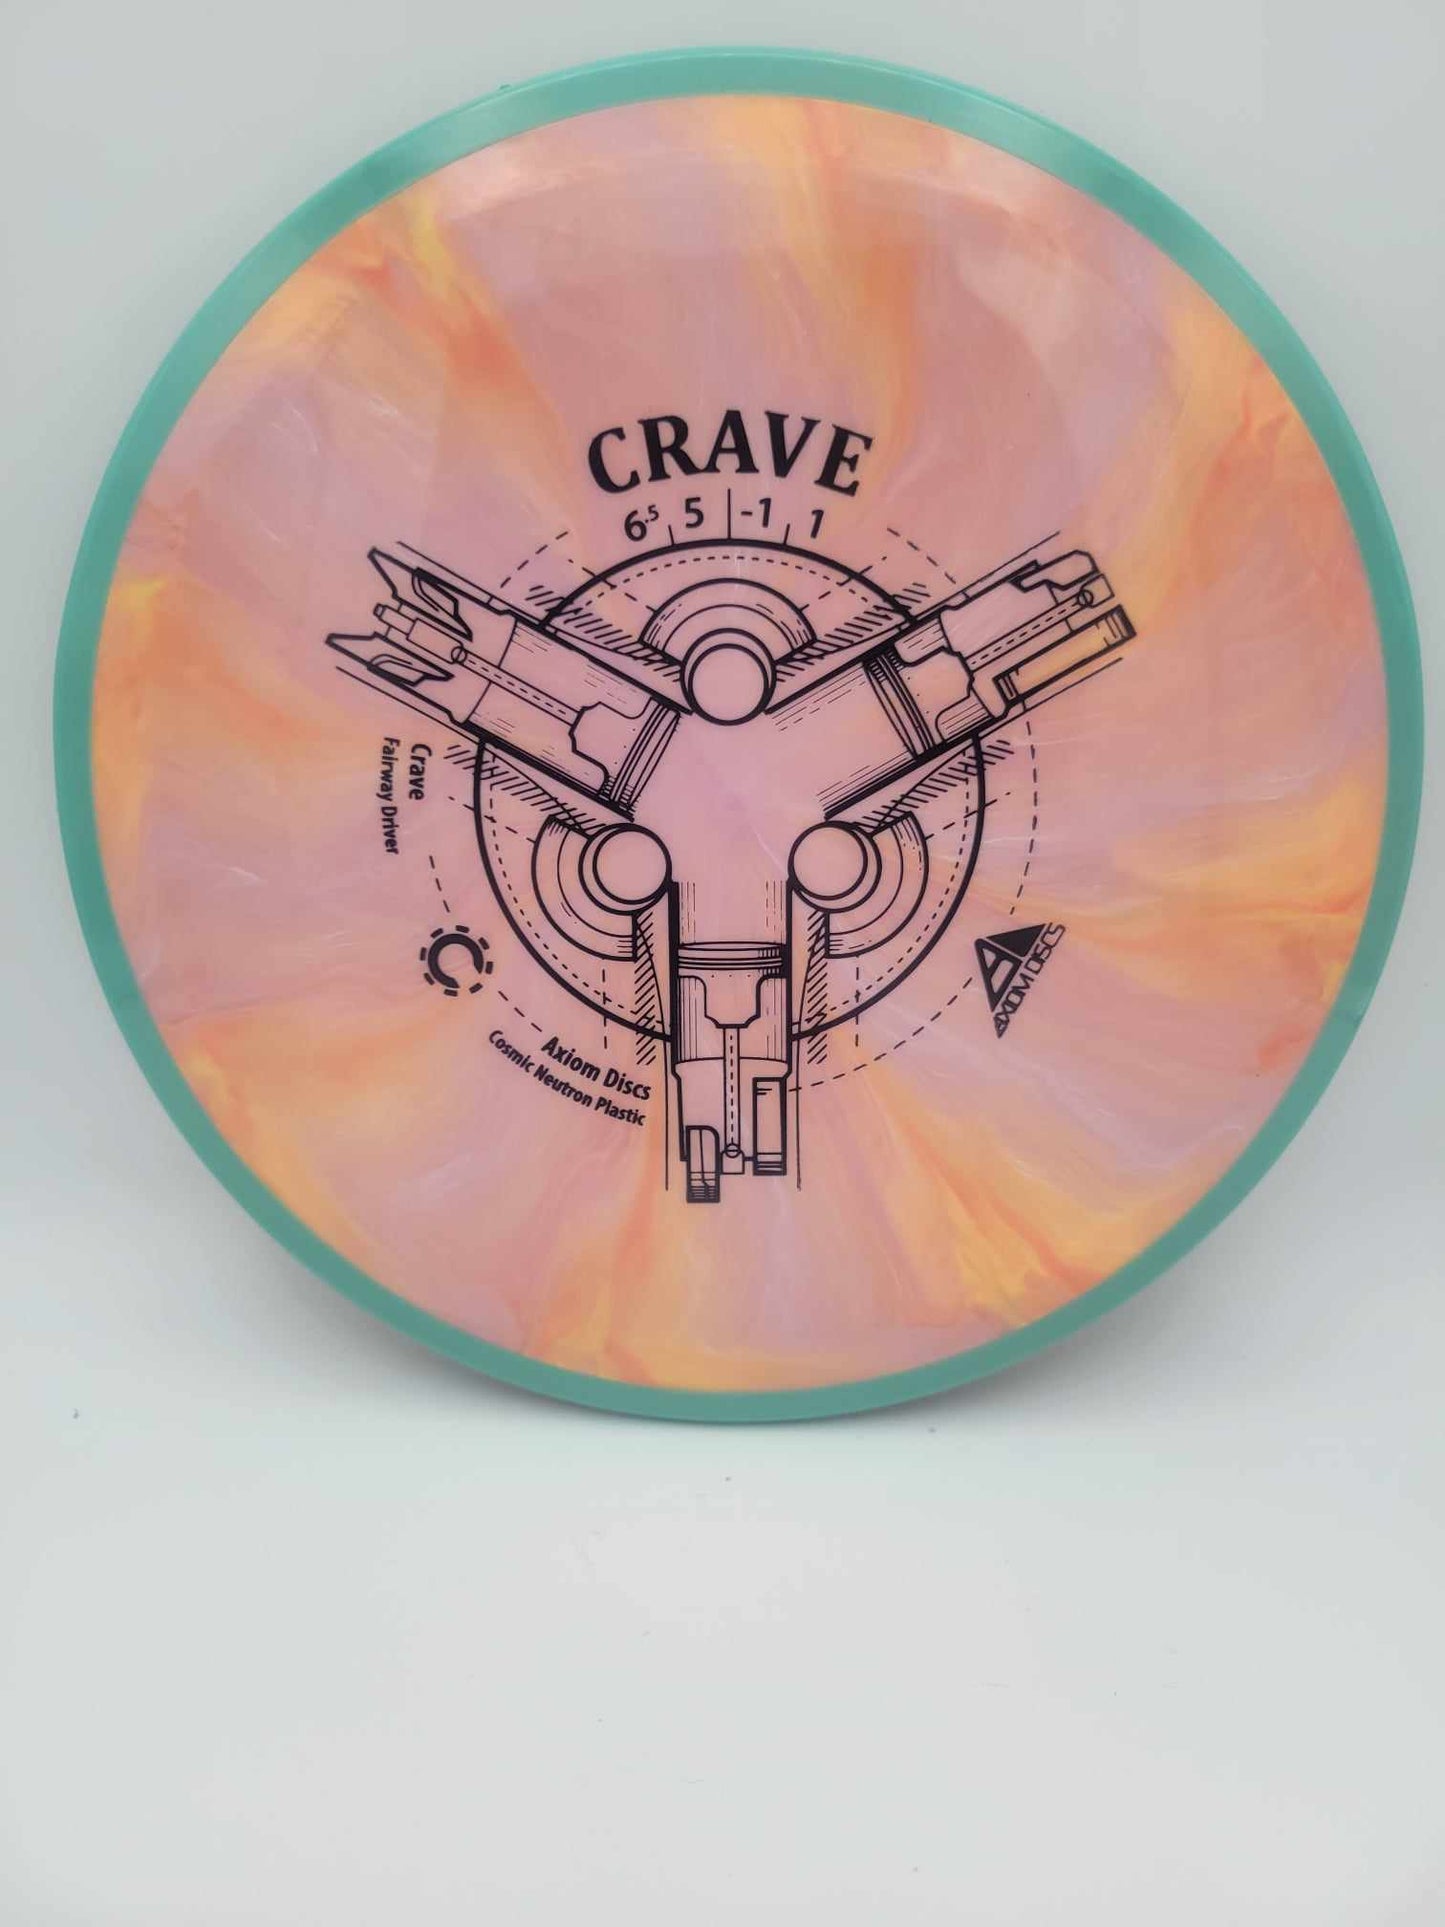 Crave (Cosmic Neutron Plastic) 6/5/-1/1